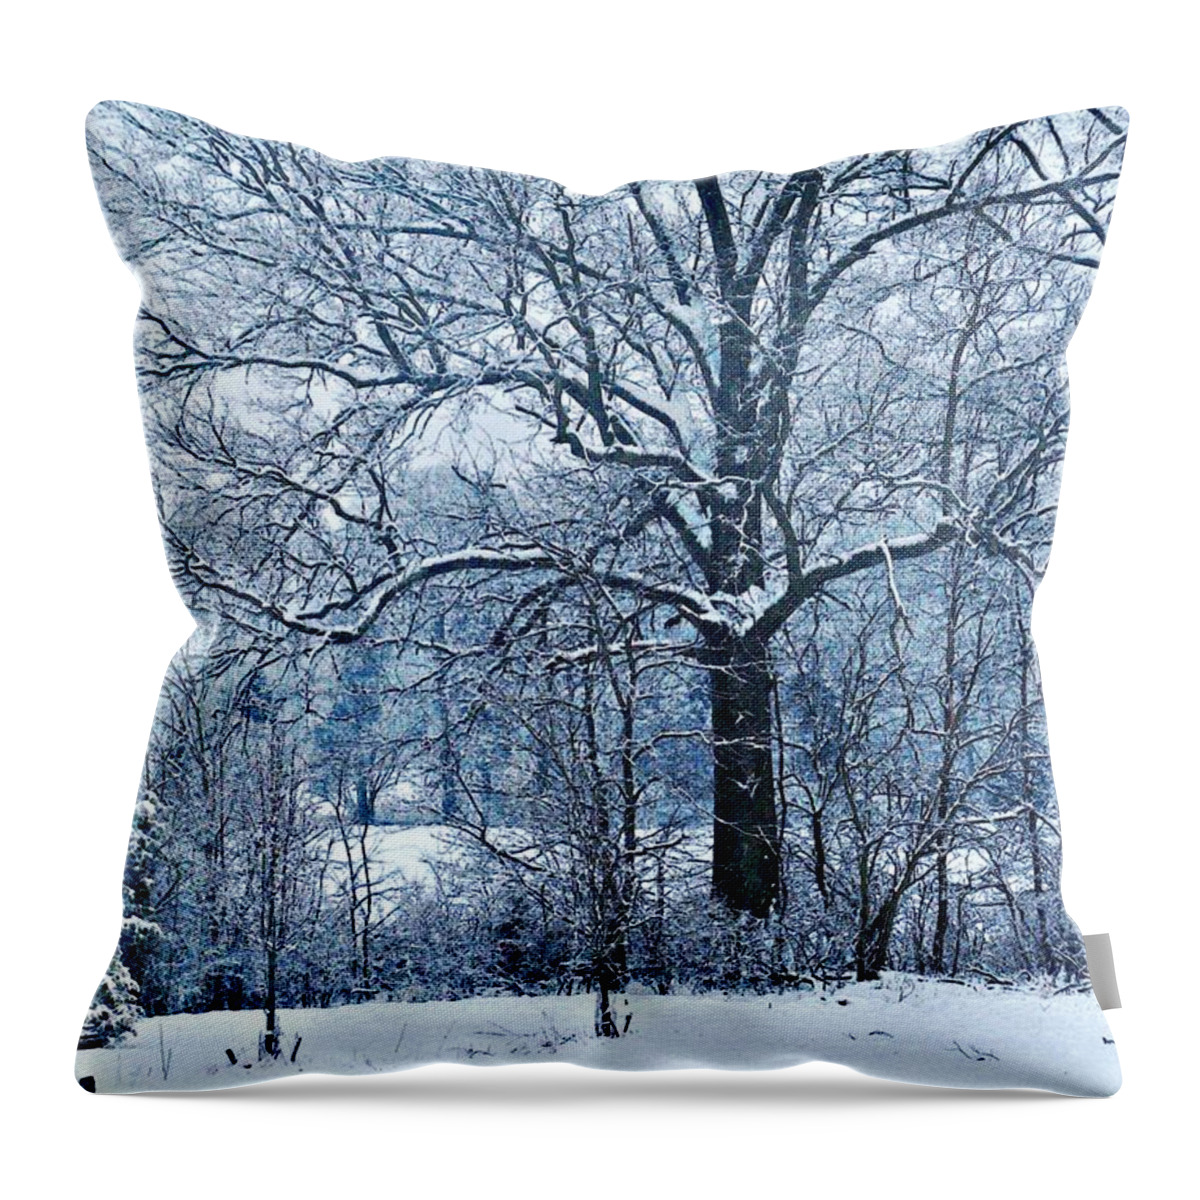 Snow Throw Pillow featuring the photograph Snow by Sarah Loft